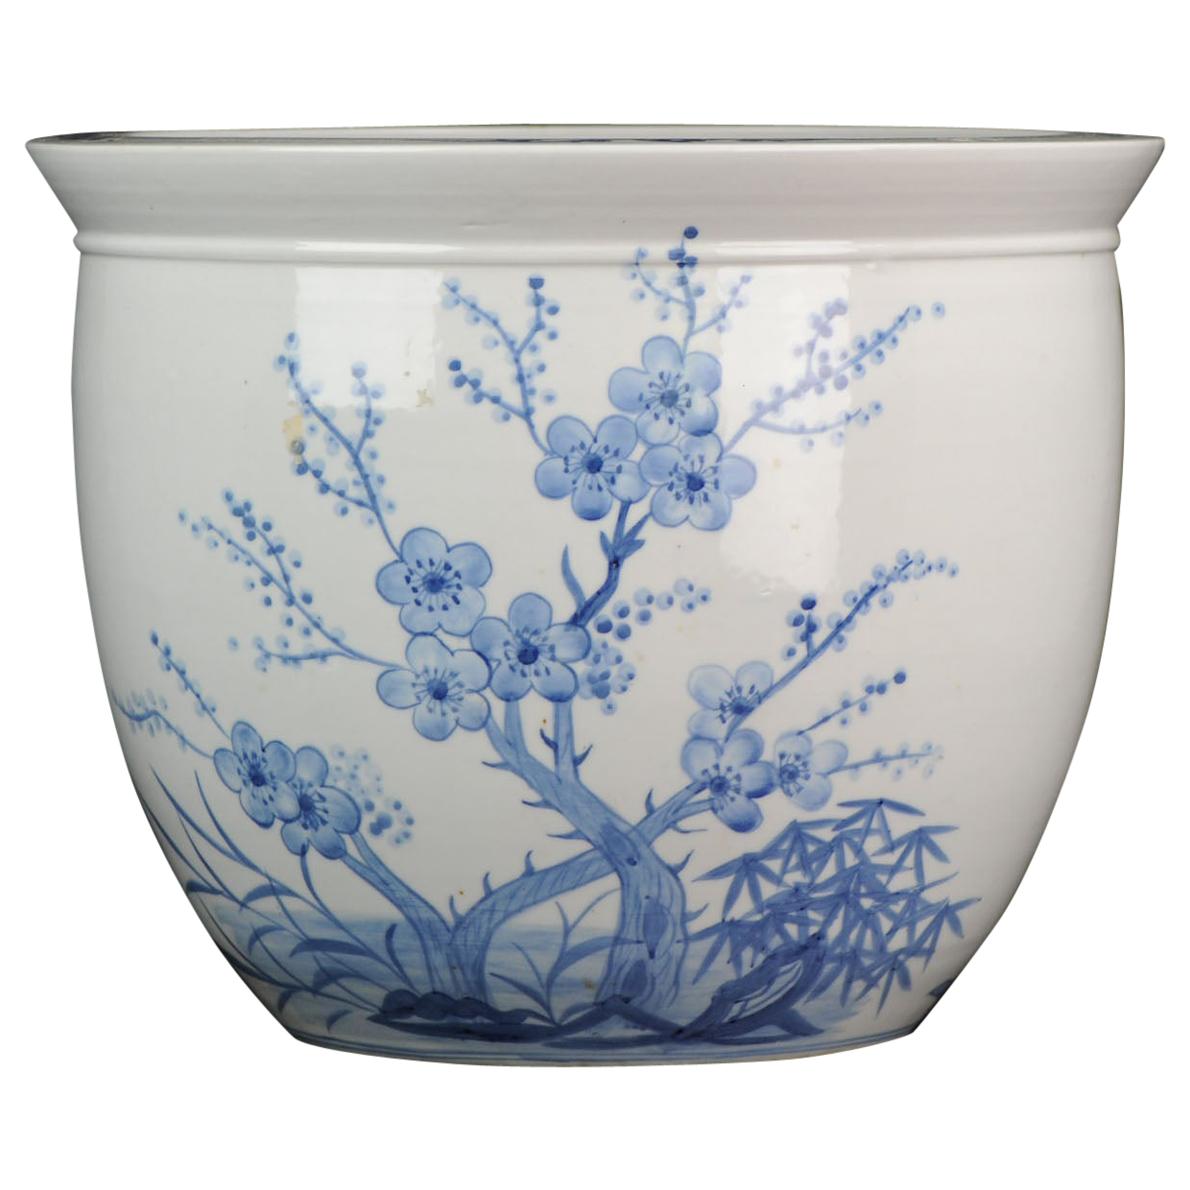 Large Blue White Chinese Porcelain Fishbowl Planter Flowers and Ducks China